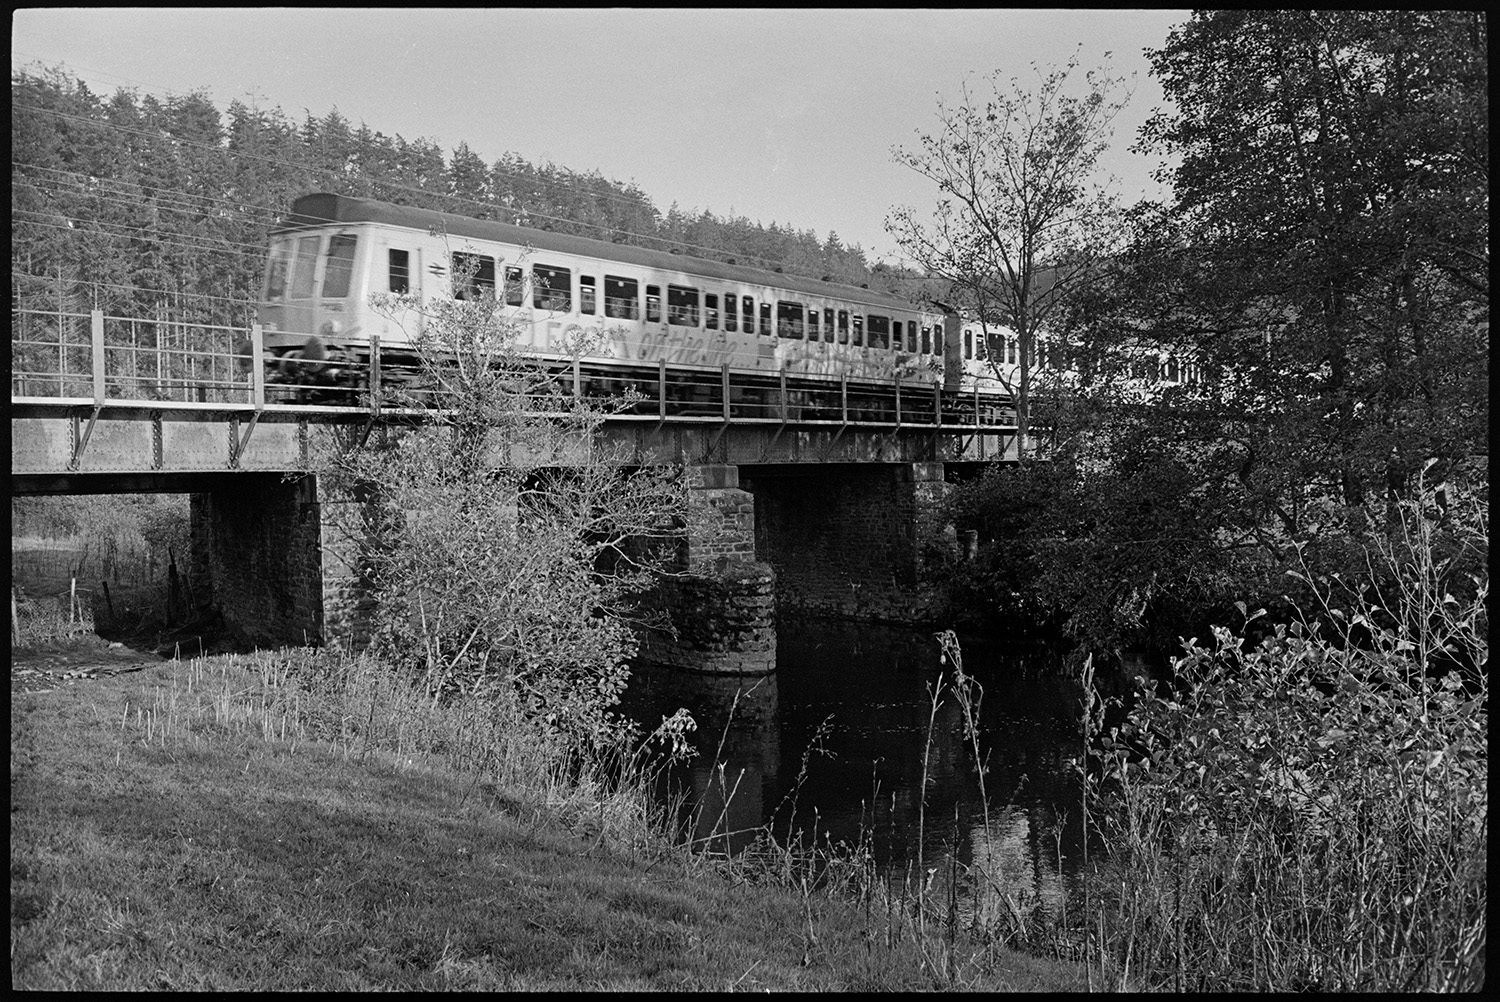 Railway bridge over river, men repairing bridge, walkway.
[A diesel train crossing a railway bridge over the River Taw near Eggesford. The bridge is supported by stone pillars.]